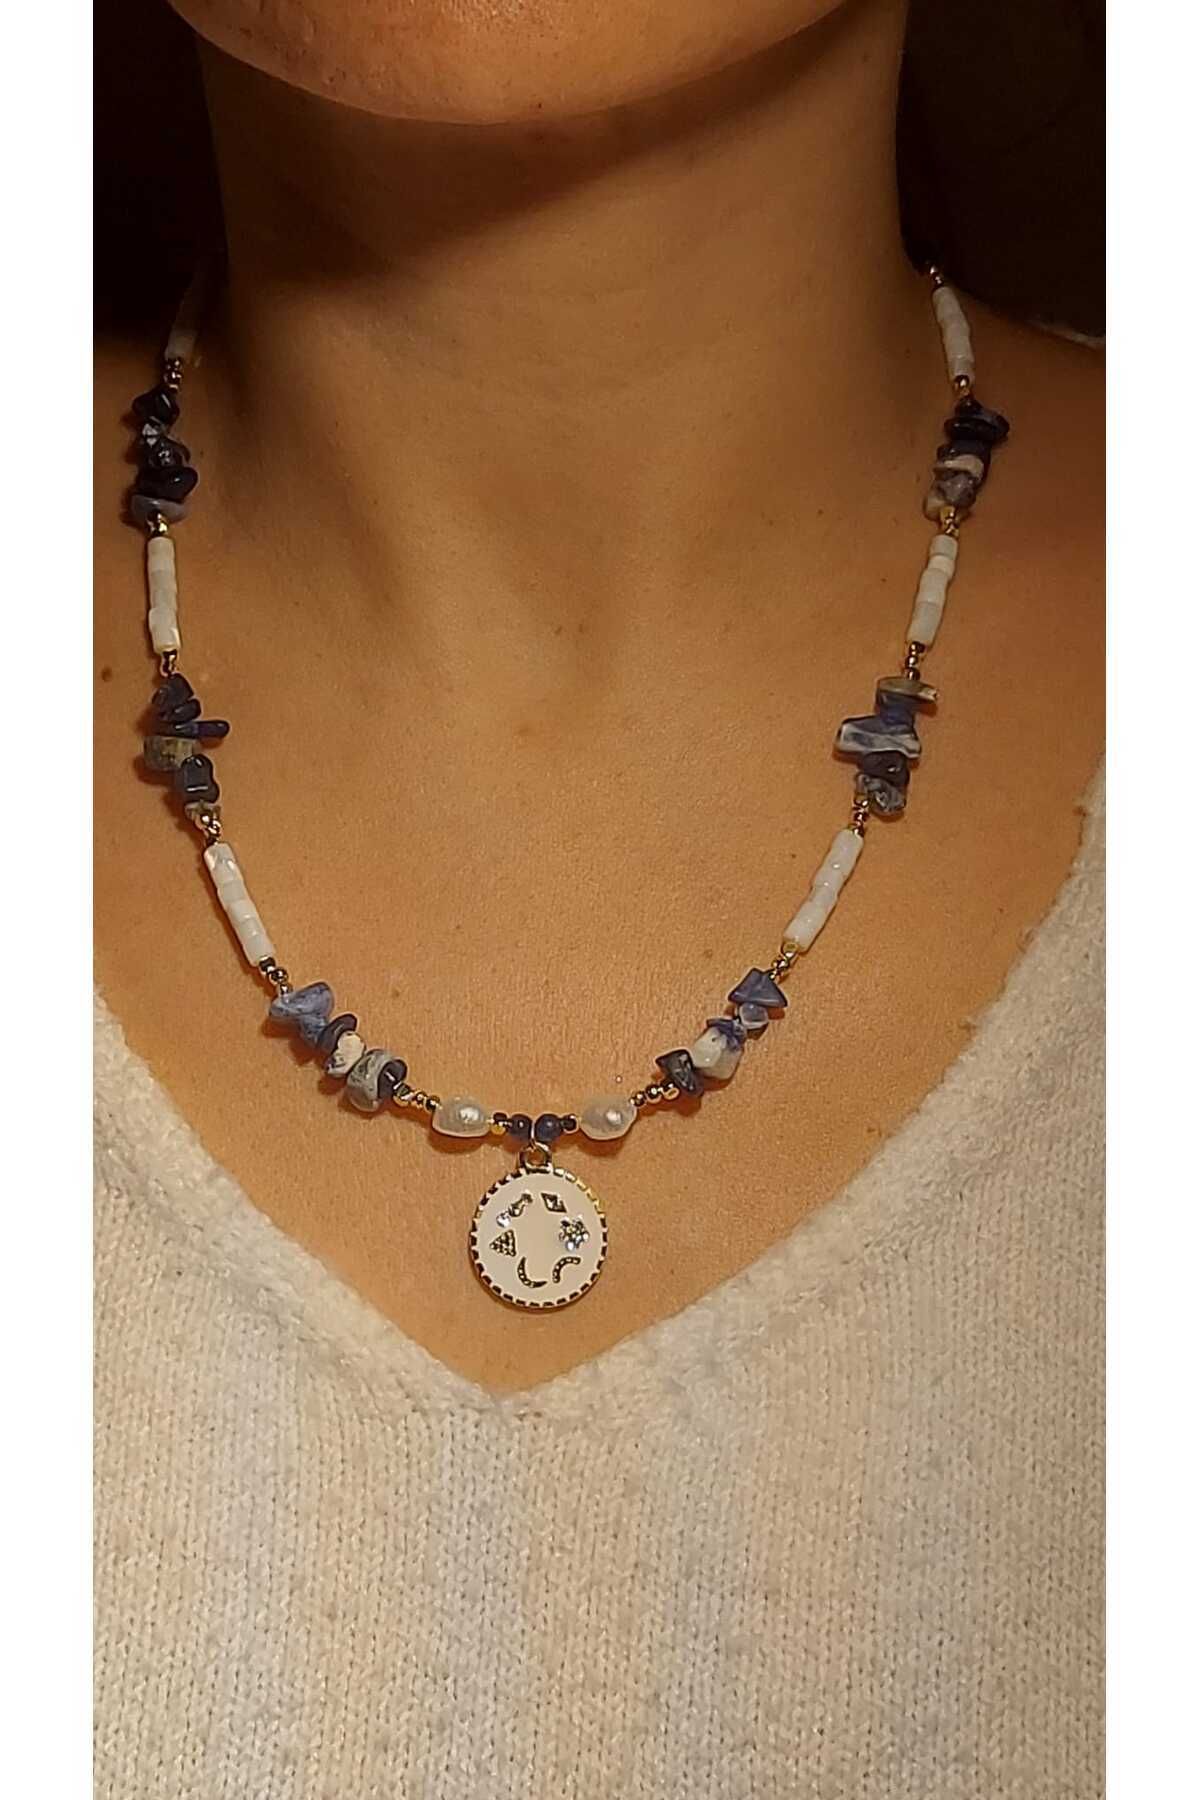 MSTR Art Lucky Charm / Symbol Necklace - Doğal Taş, Sedef, Sodalit, Gerçek Inci, Cam Kristal, Uğur Kolyesi.